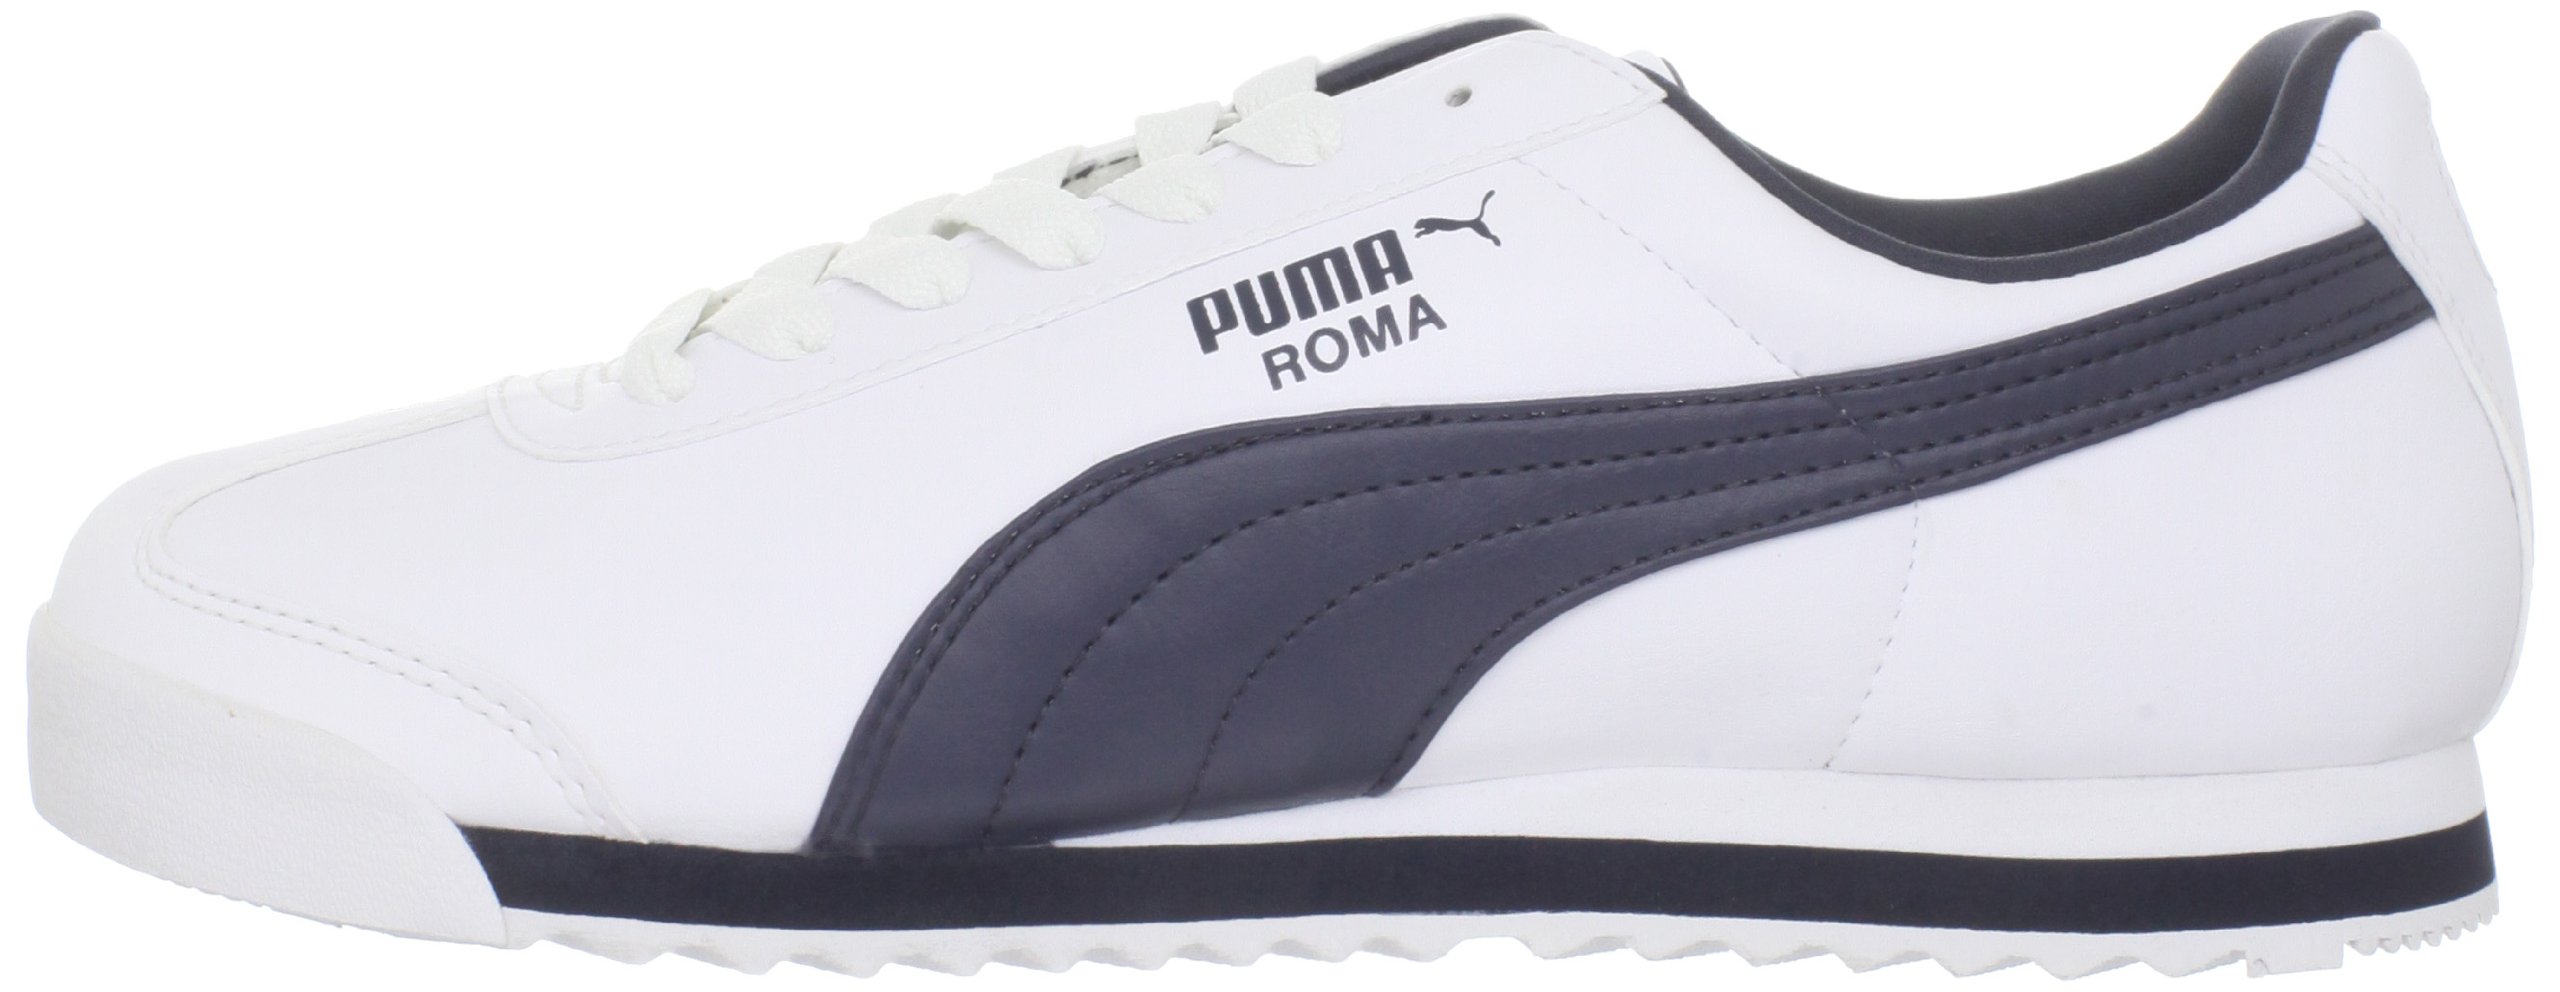 PUMA Men's Roma Basic Fashion Sneaker, White/New Navy (11 D(M) US) - image 2 of 7